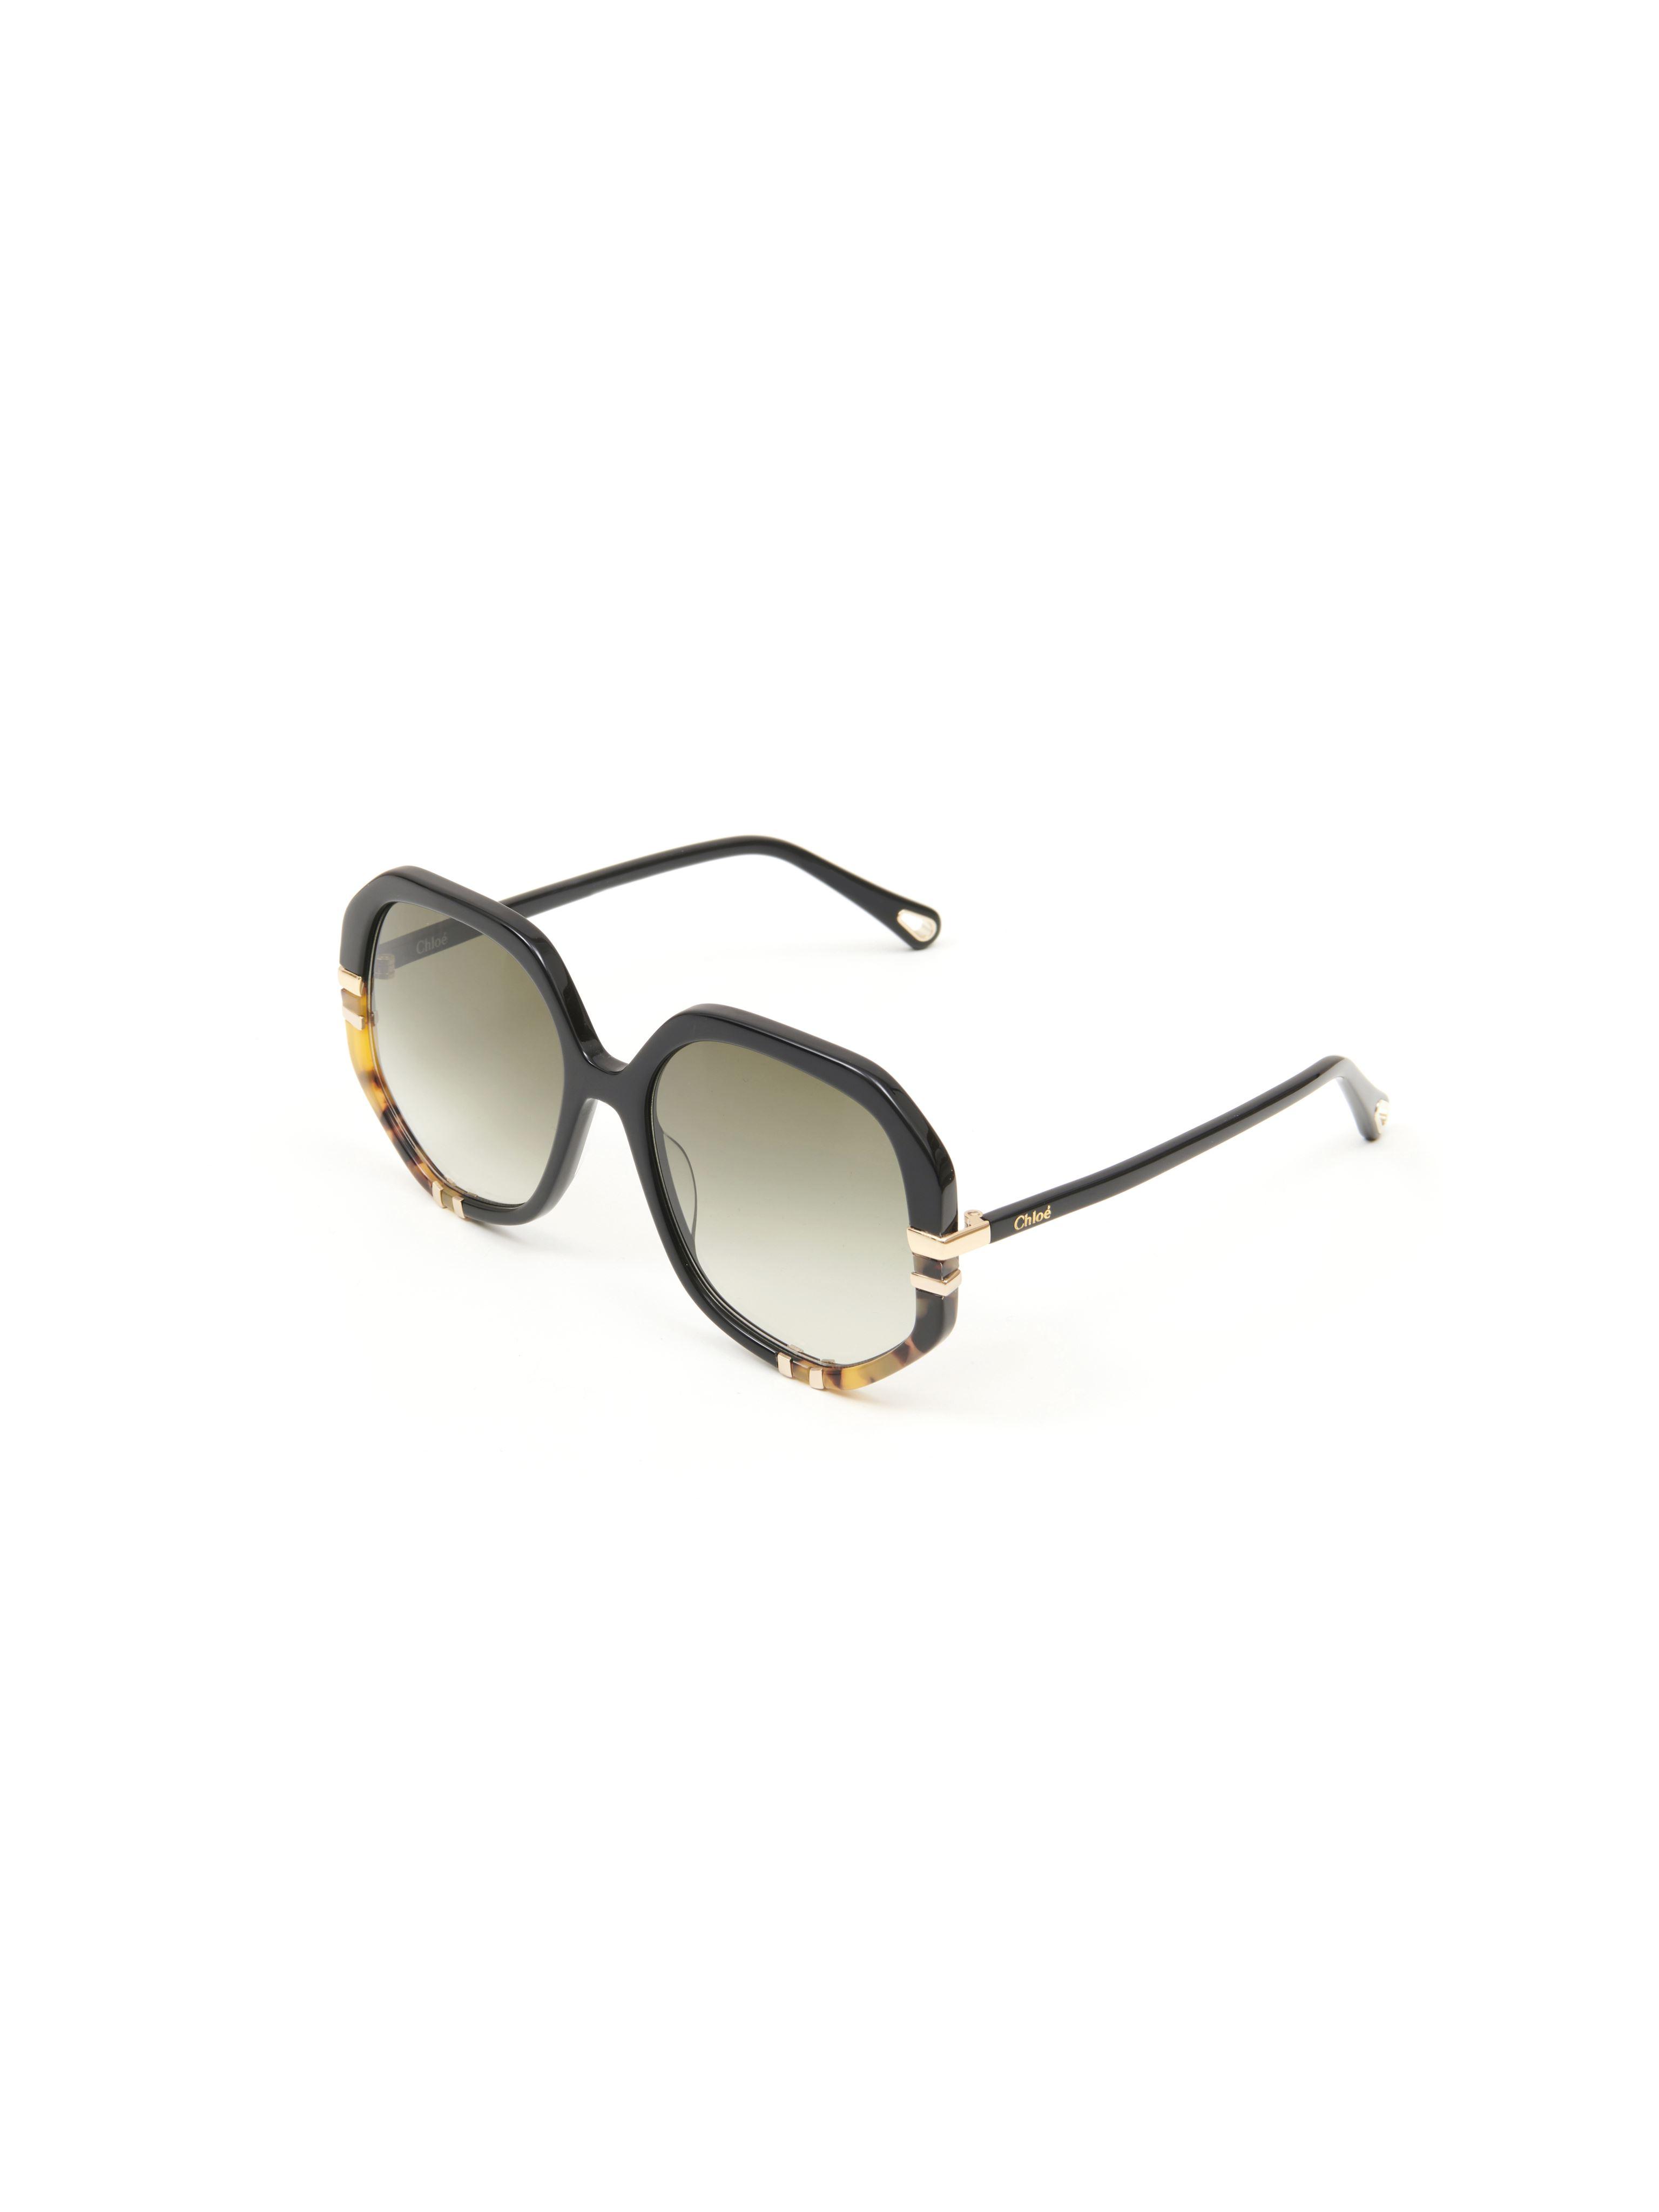 Chloé West Sunglasses in Black | Lyst